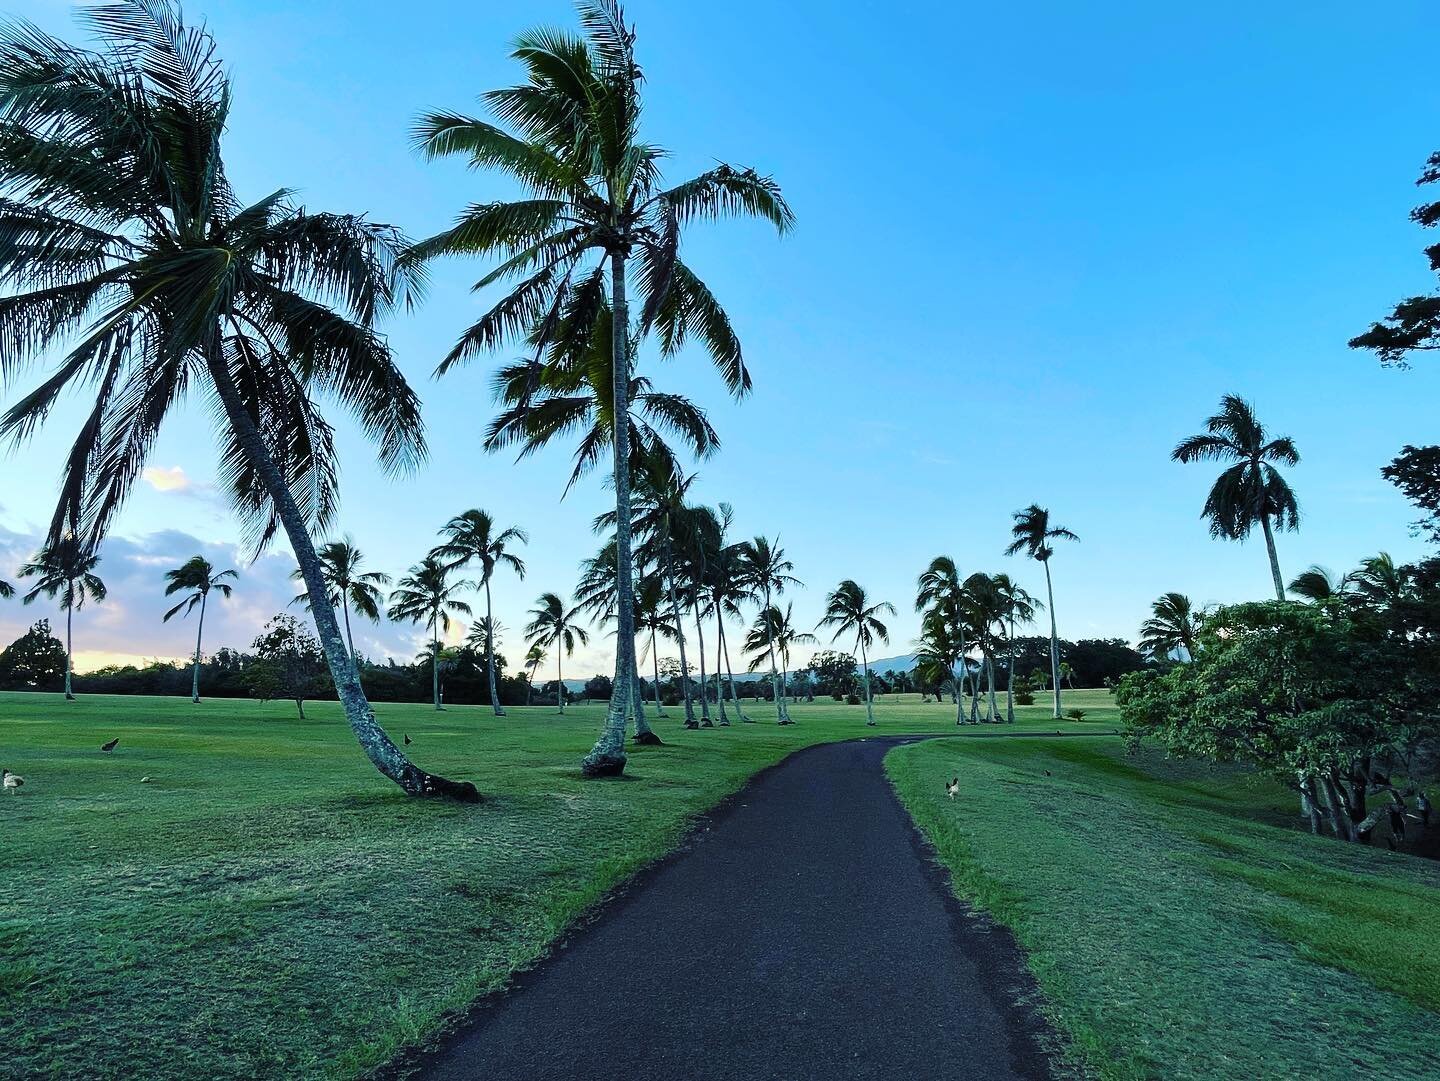 Slow down and enjoy the simple things in life.🌴
.
.
.
#sunset #walk #palmtrees #golfcourse #nature #oceanviews #kauai #kauaihawaii #islandlife #pregnancy #hawaii